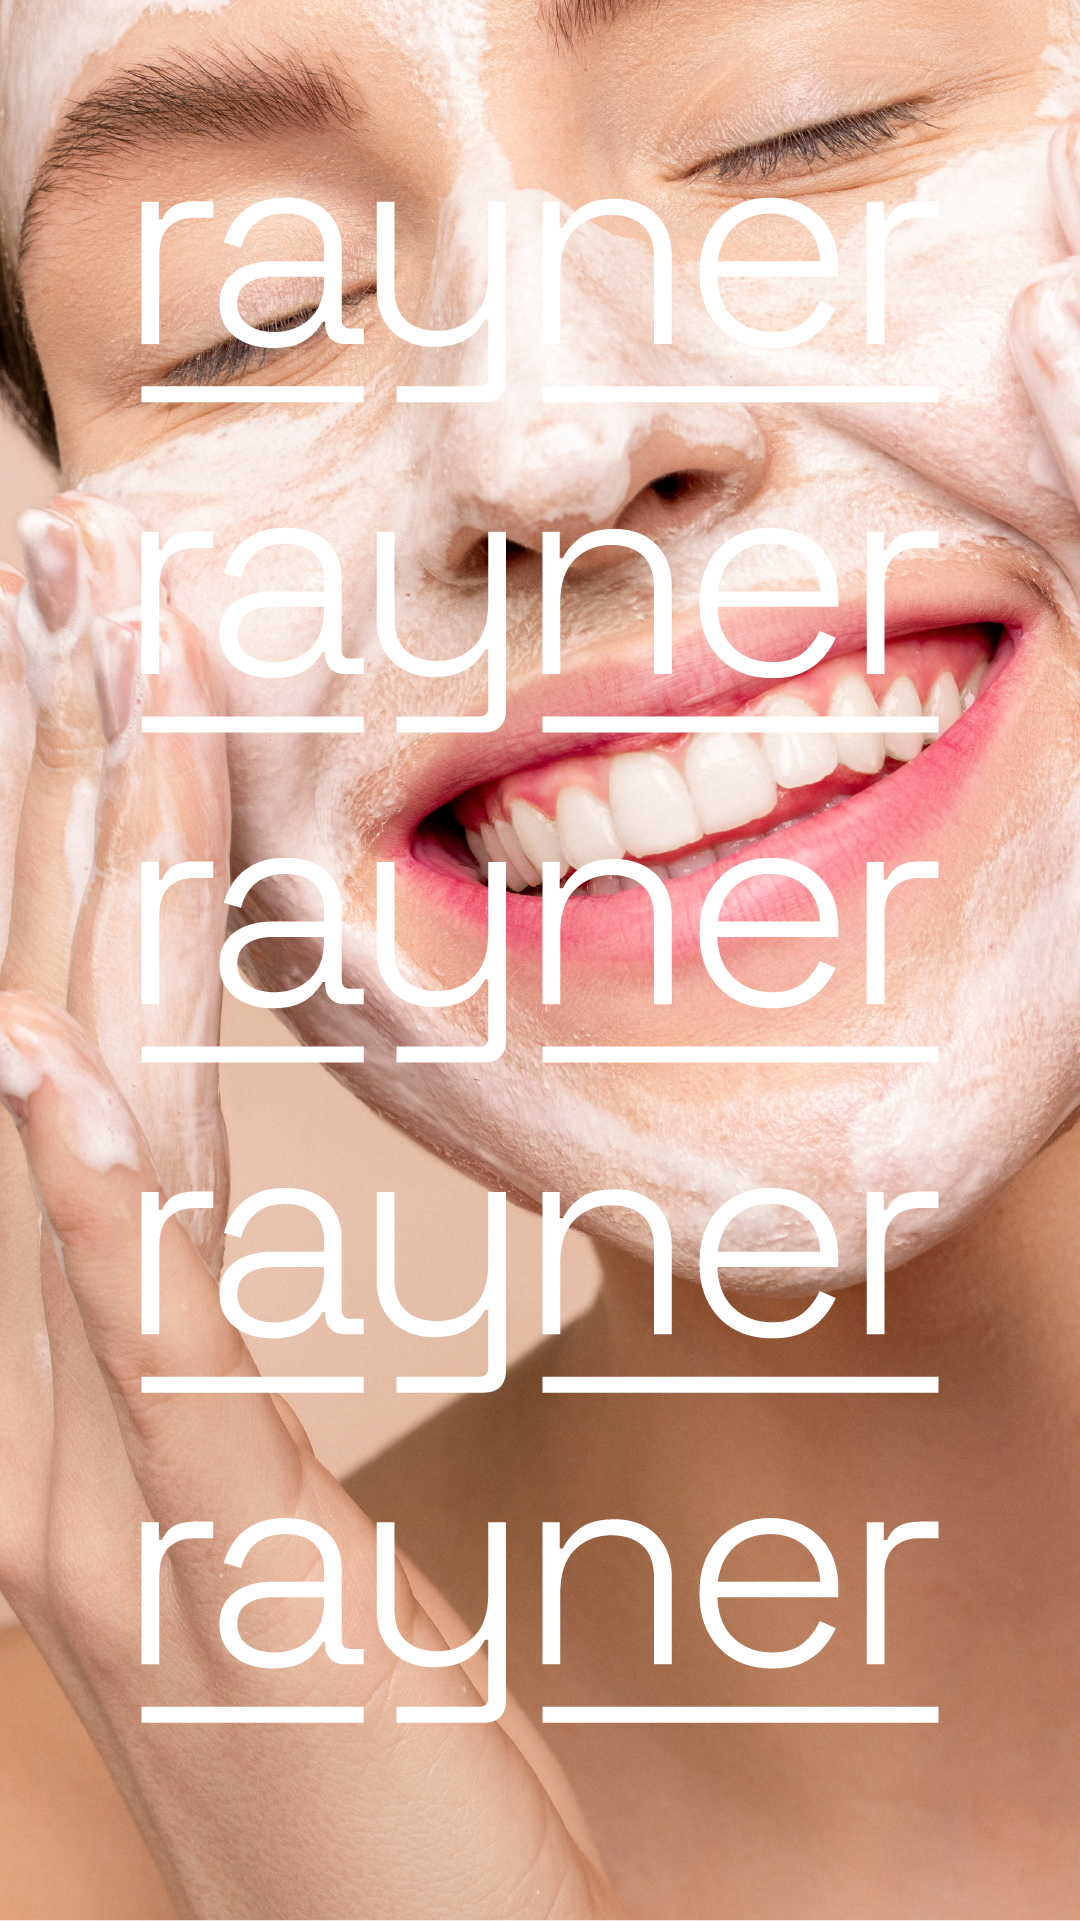 IGR Rayner Skincare Artboard 4 copy 2.png